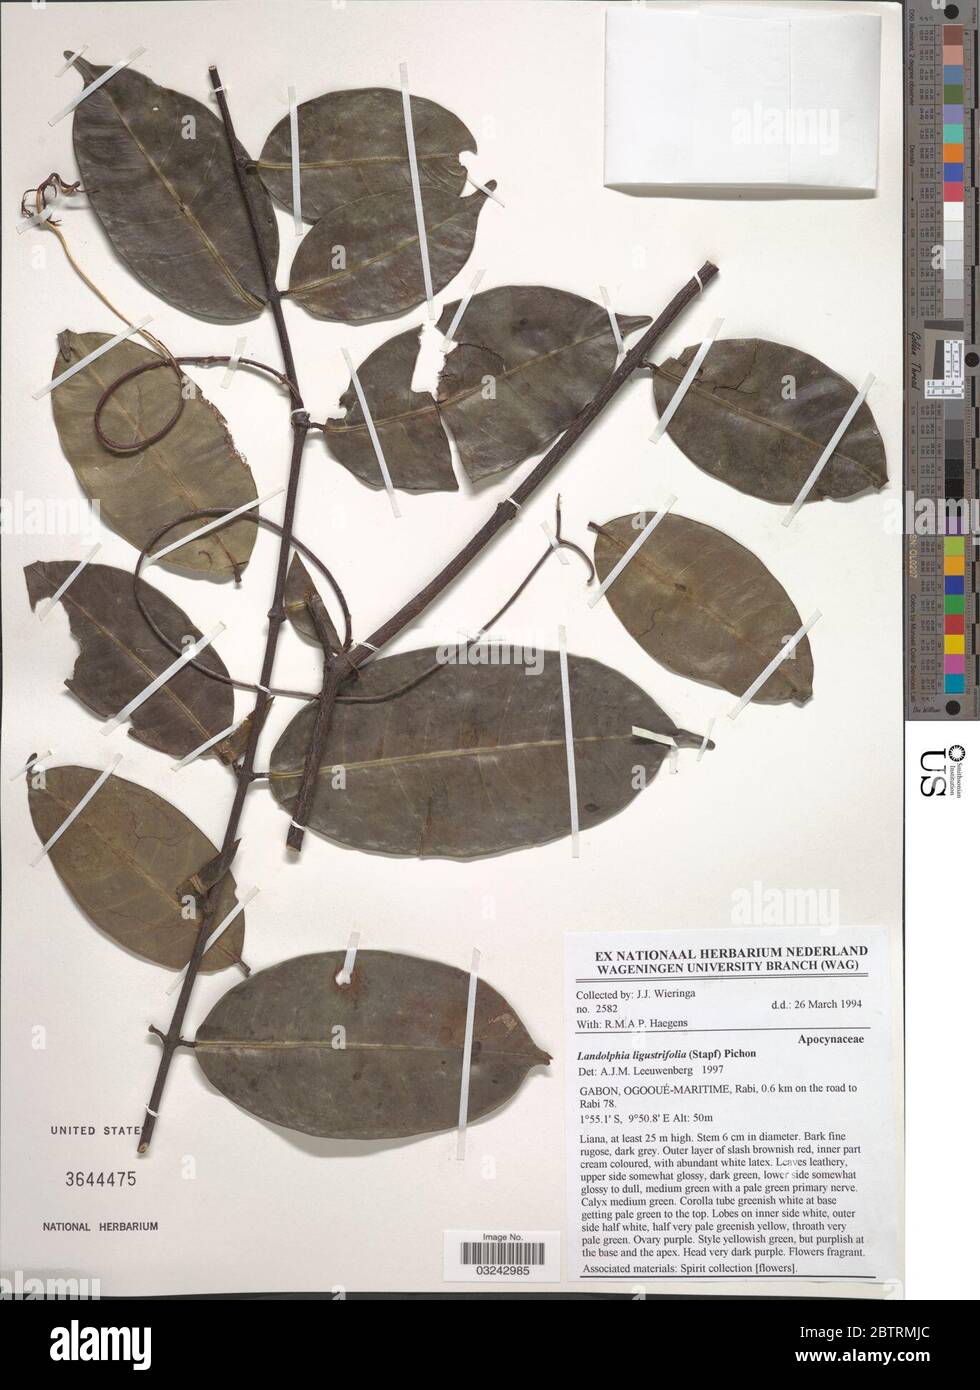 Landolphia ligustrifolia Stapf Pichon. Stock Photo